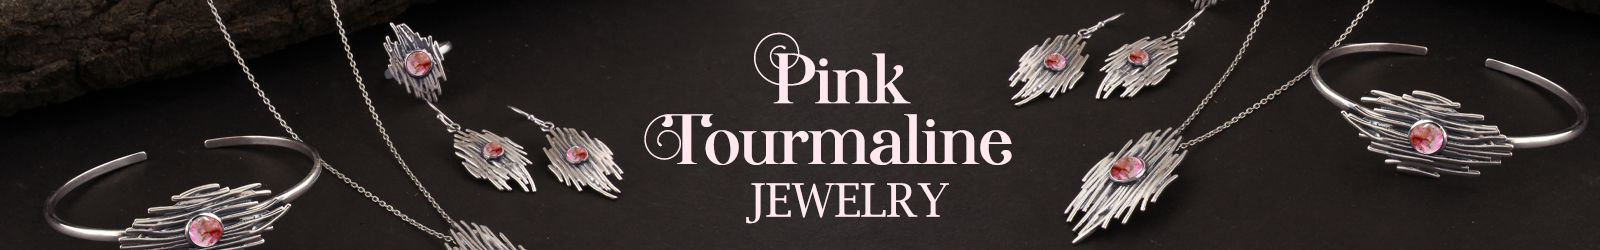 Silver Pink Tourmaline Jewelry Wholesale Supplier